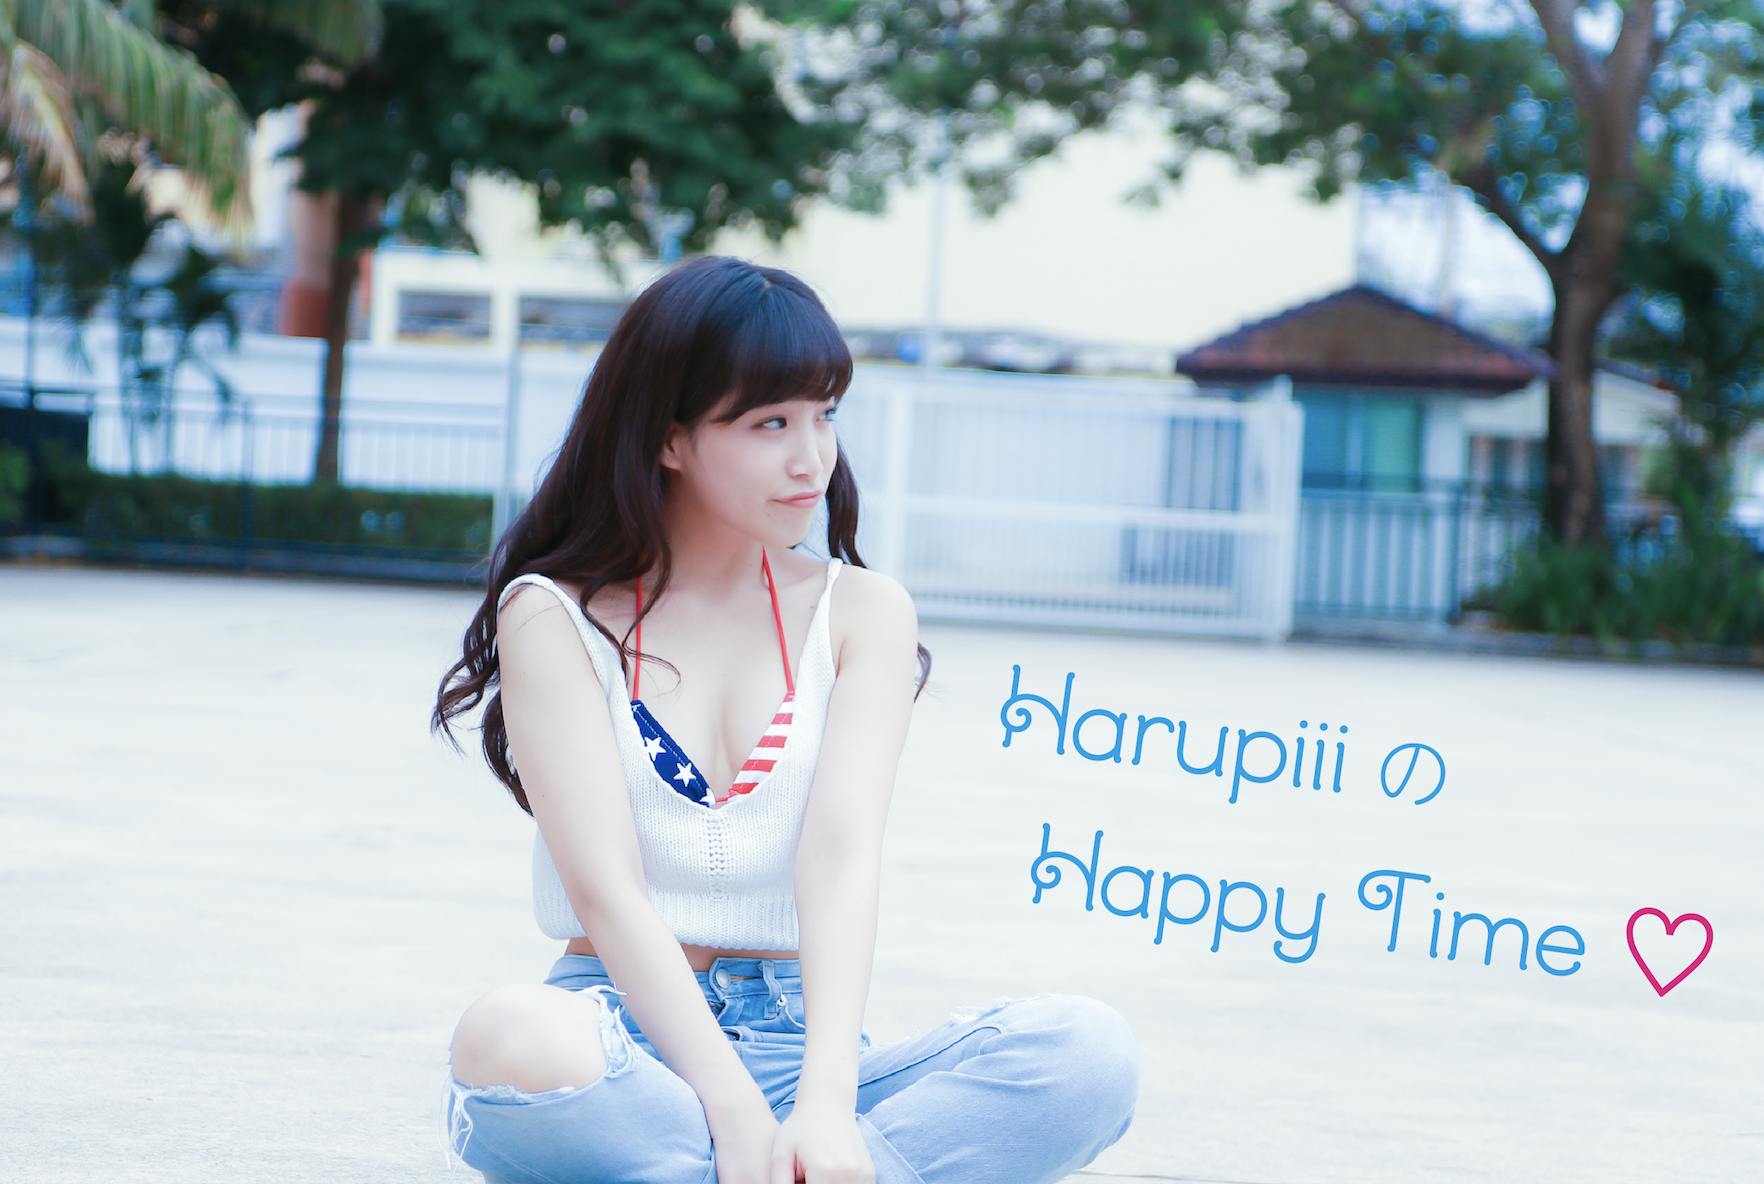 Harupiii公式ファンクラブ『HarupiiiのHappyTime♡』